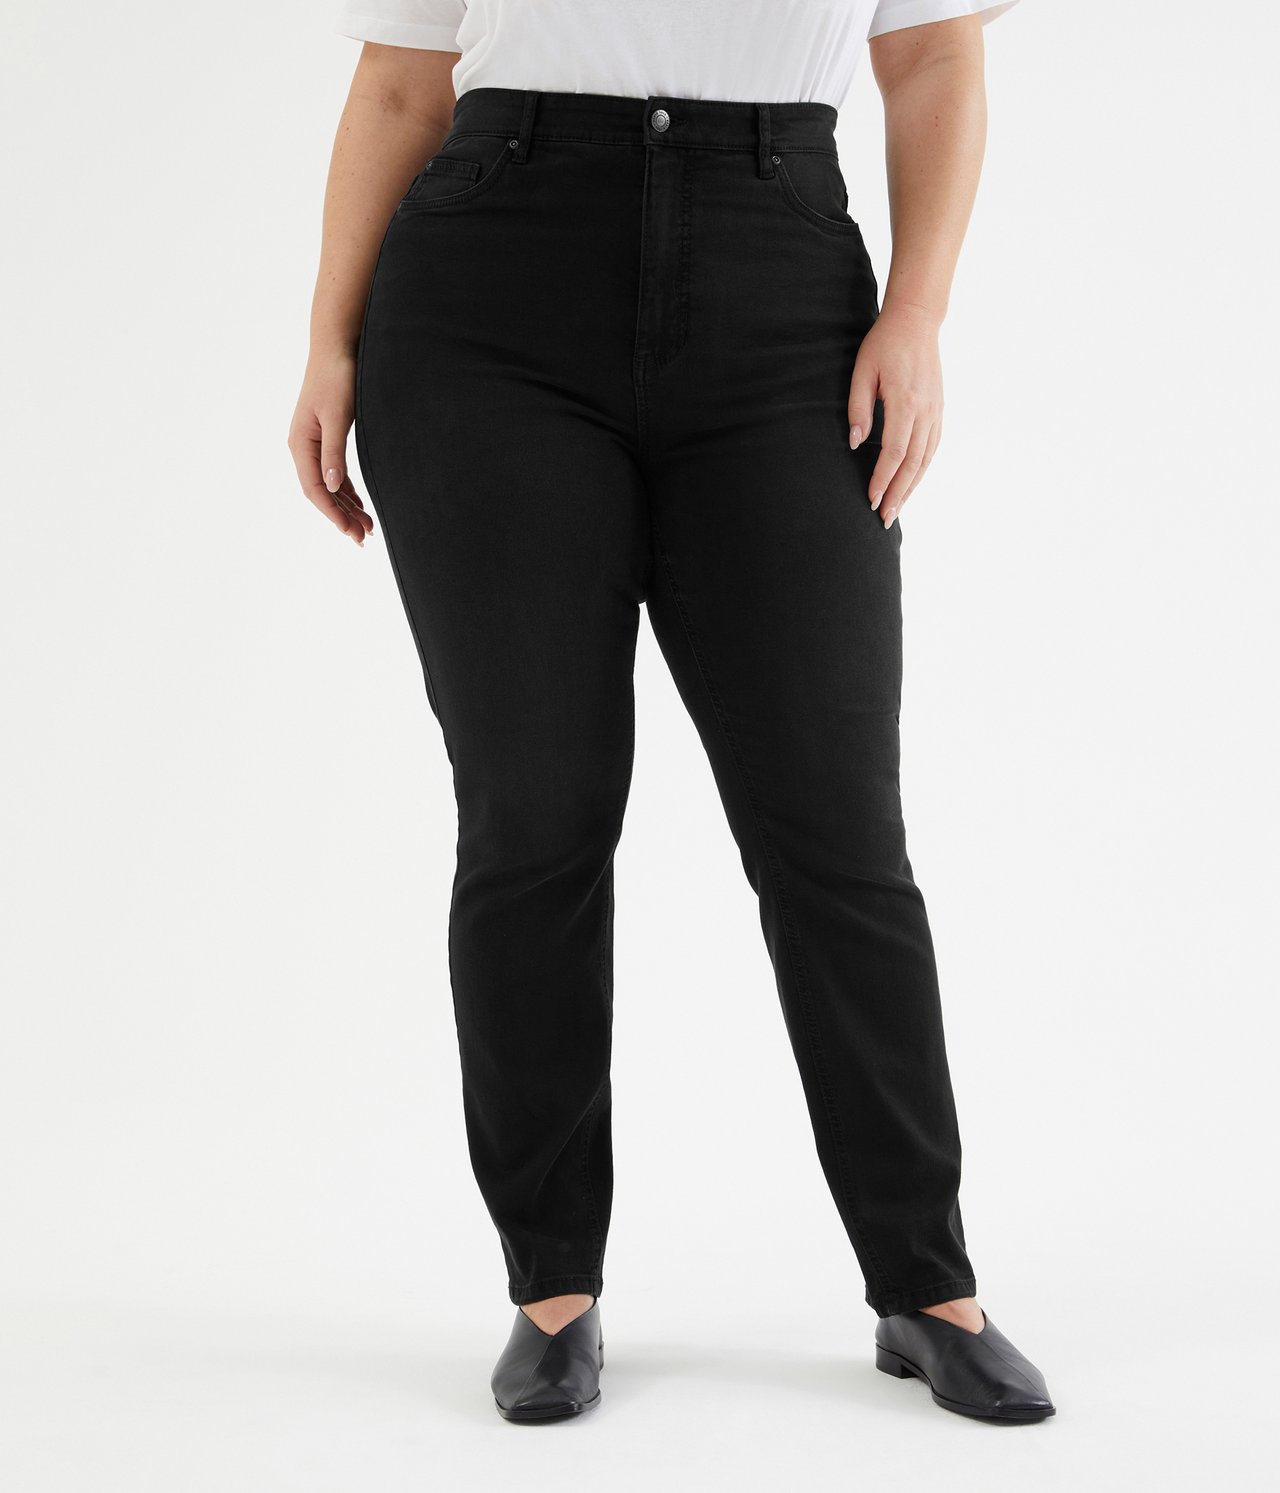 Jenny jeans straight slim fit Svart denim - 44 - 3